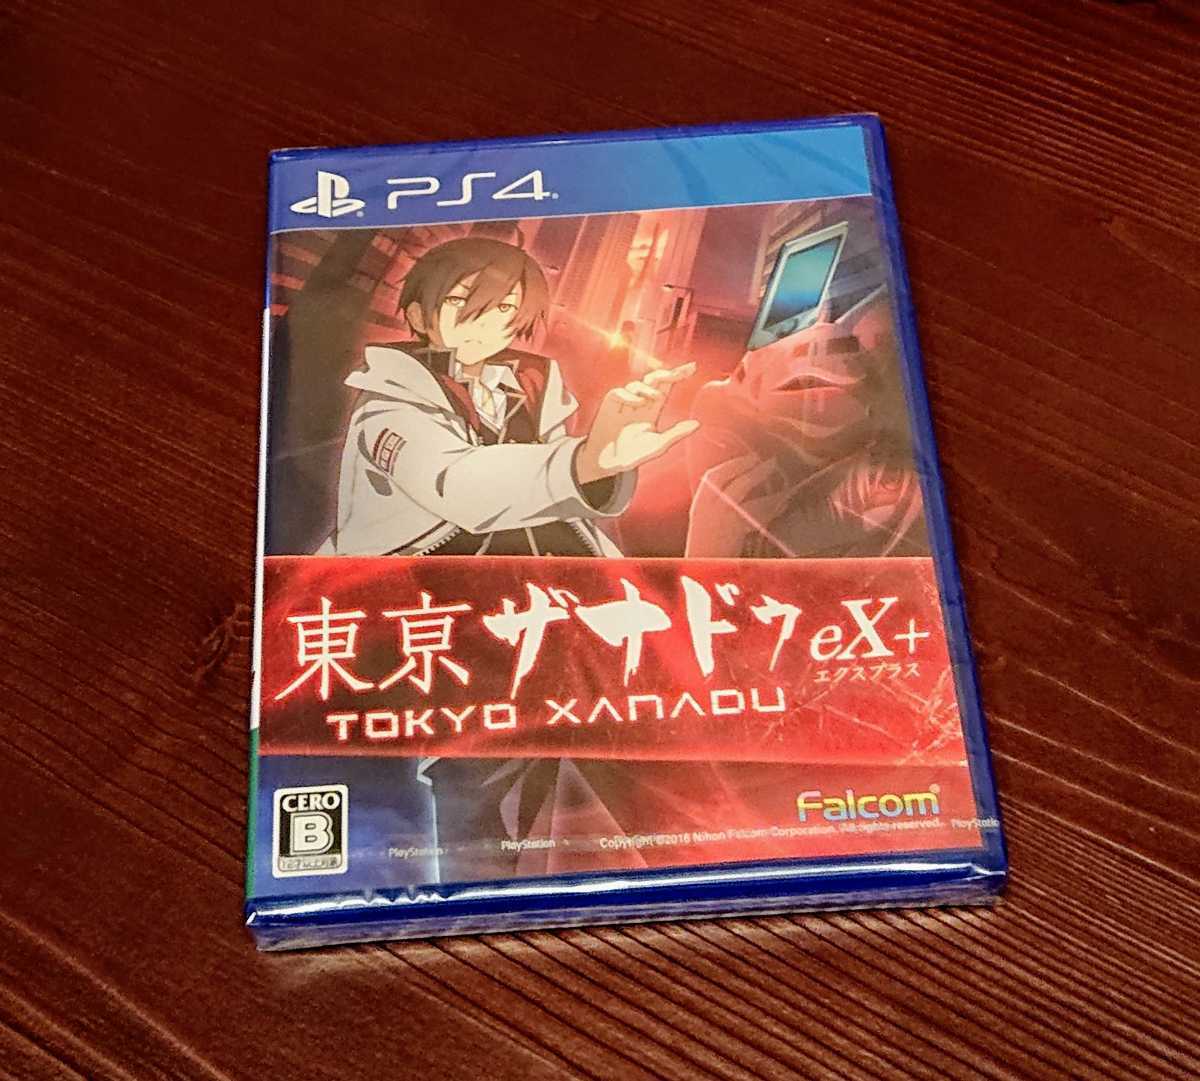 「PS4 TOKYO XANADU eX+」Falcom【東亰ザナドゥ エクスプラス】日本ファルコム 新品 未使用 未開封